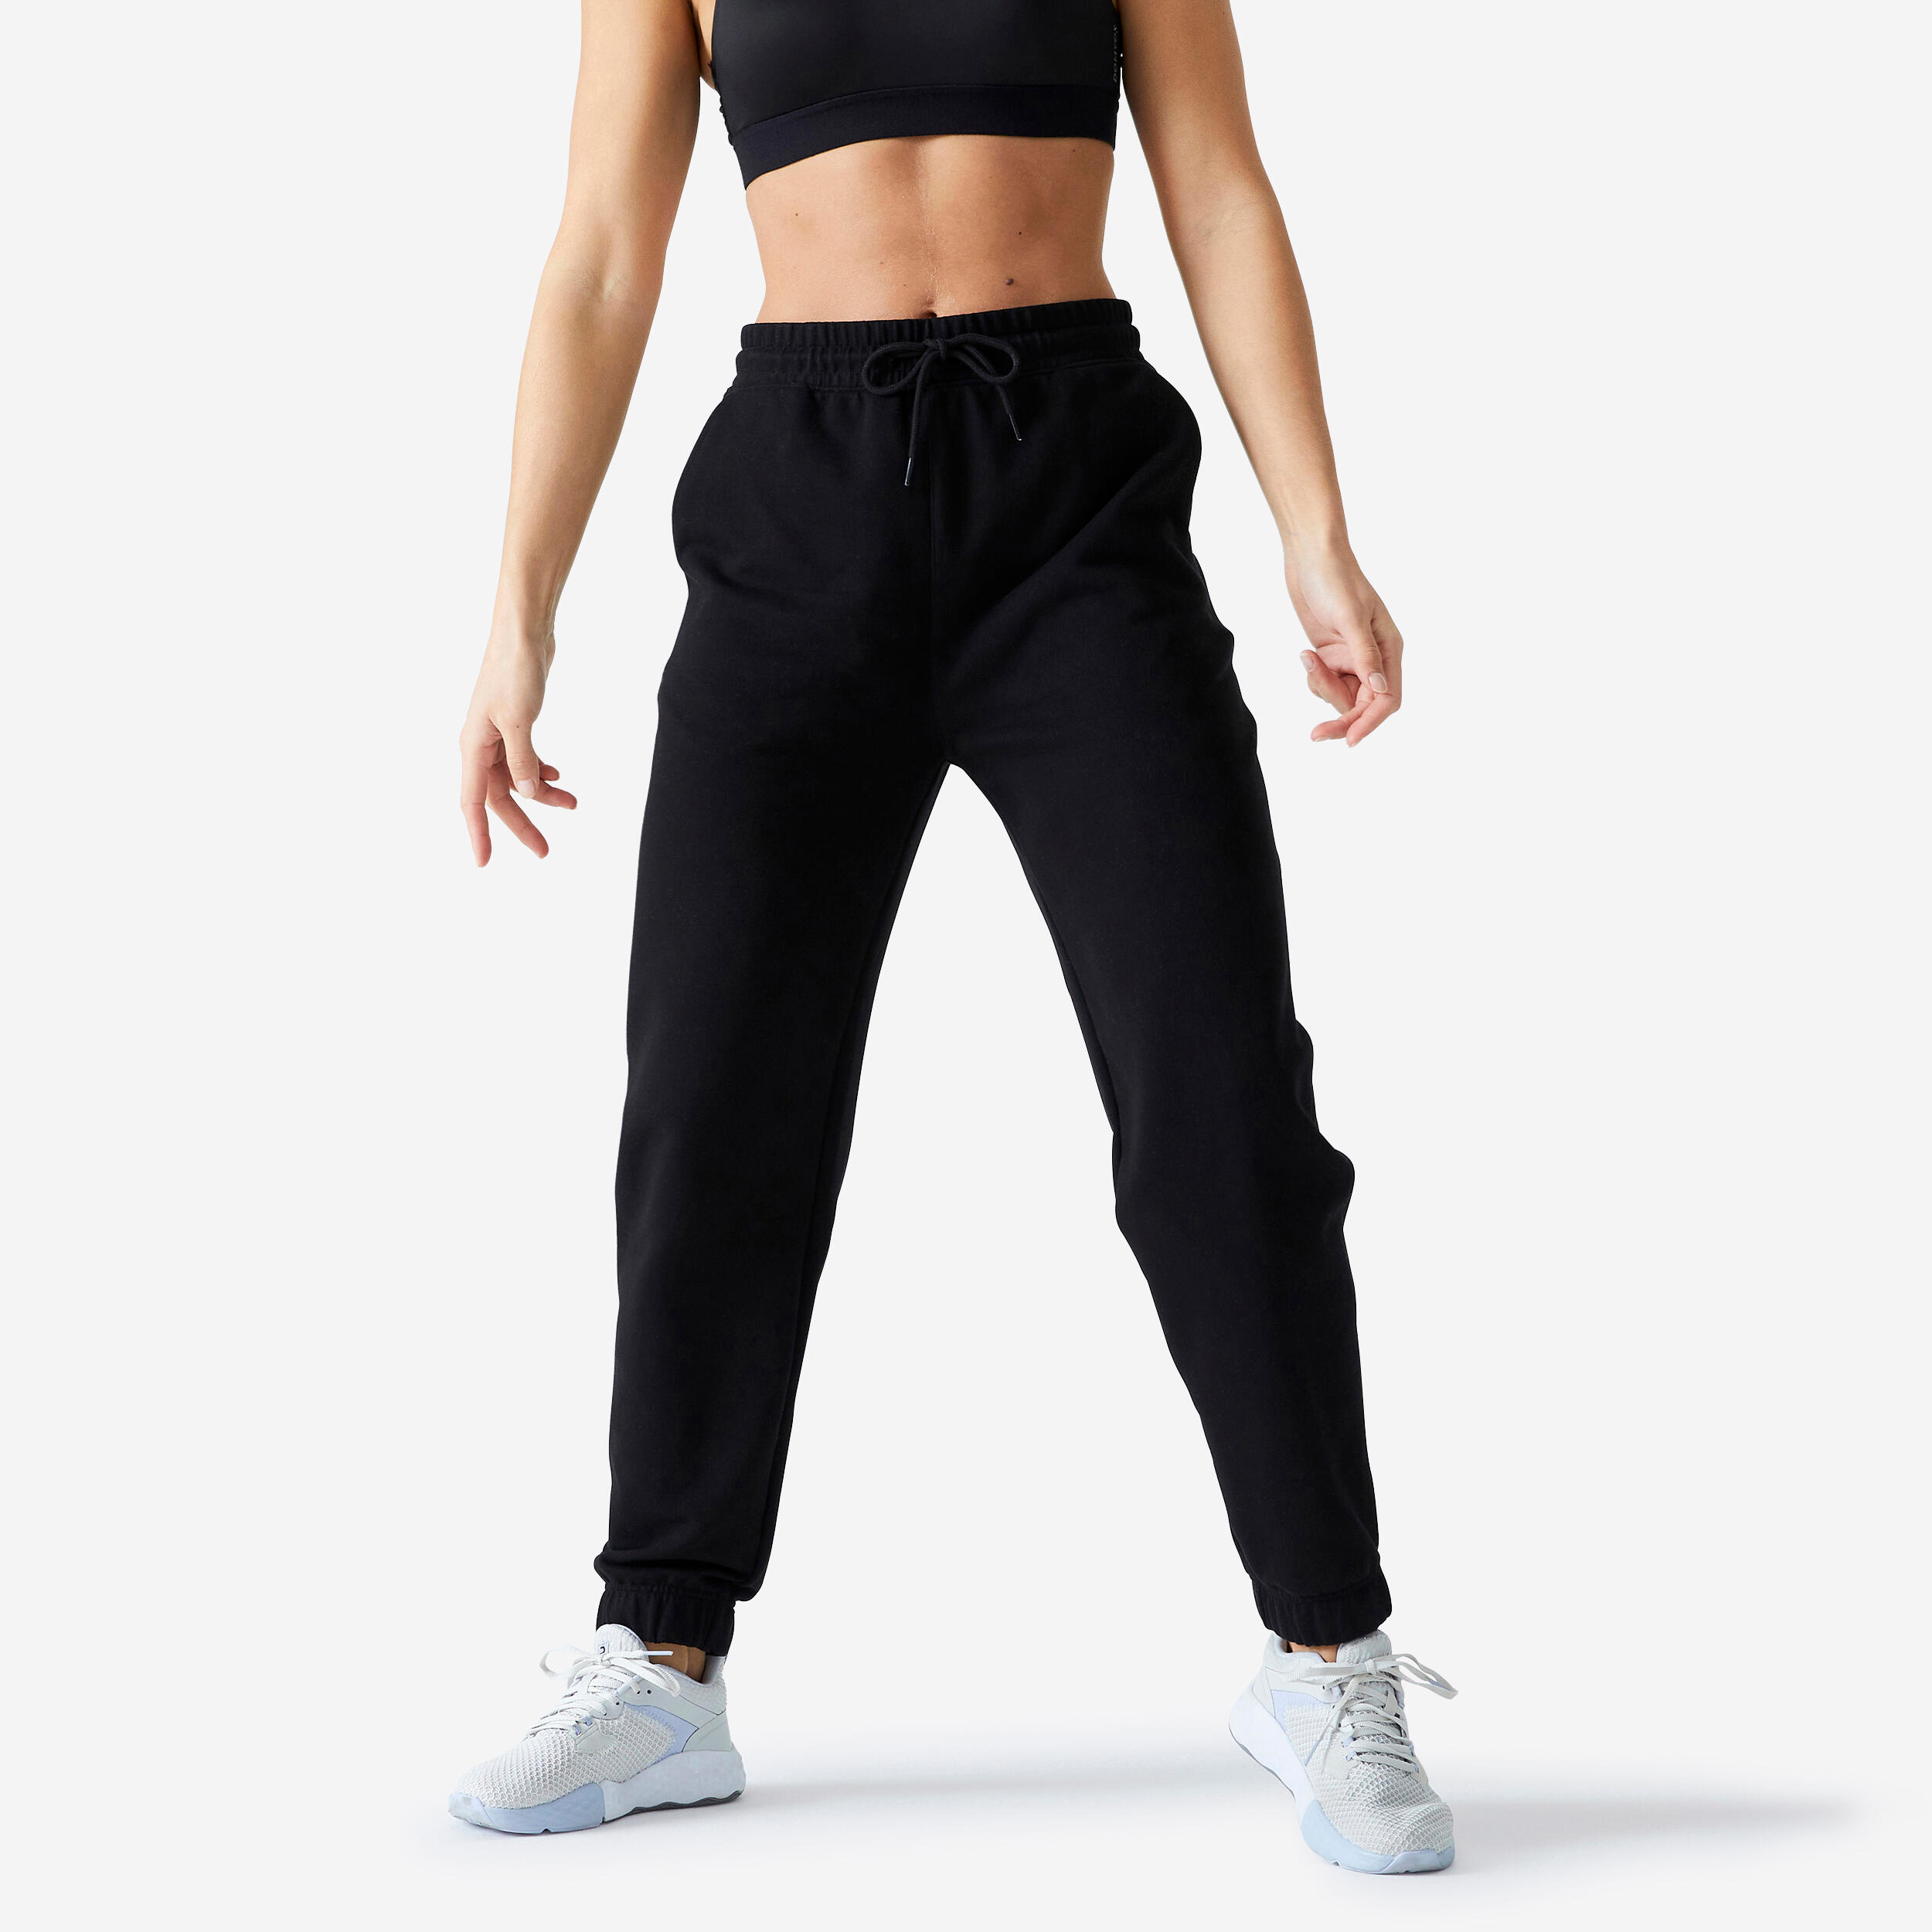 Women’s Fitness Pants - 100 Black